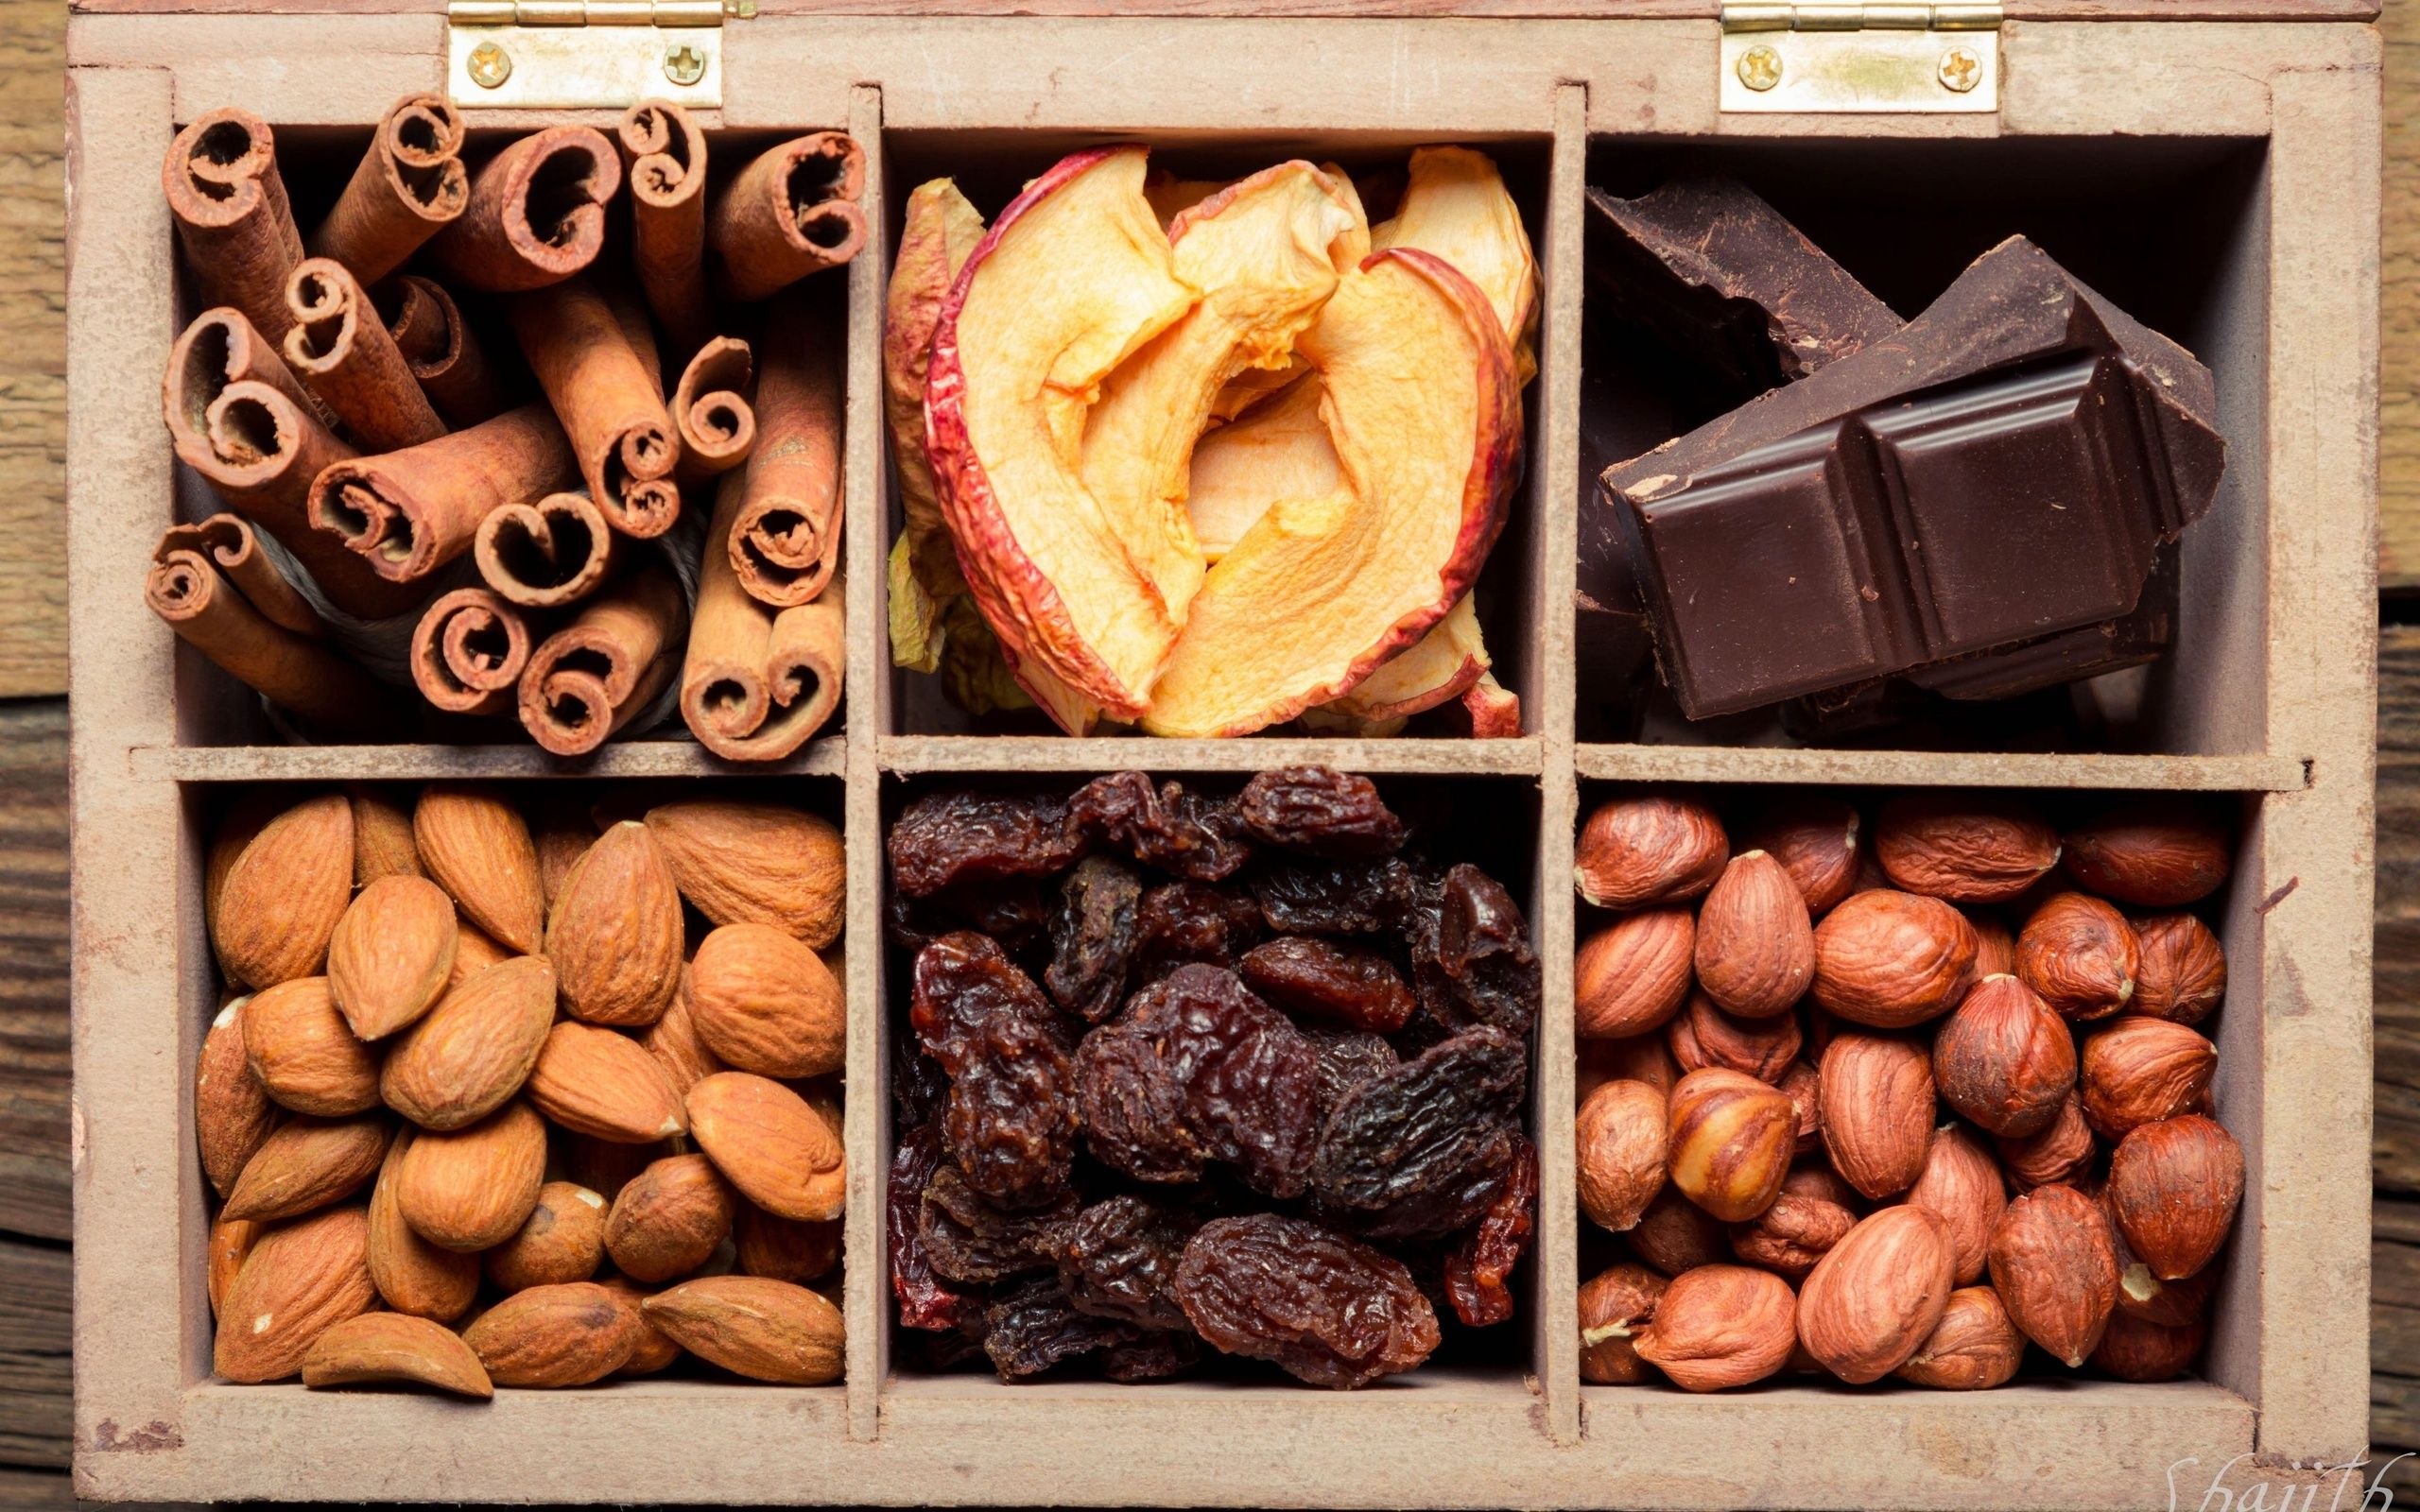 Nuts dried fruit chocolate raisins apples cinnamon almonds hazelnuts box wallpaperx1600